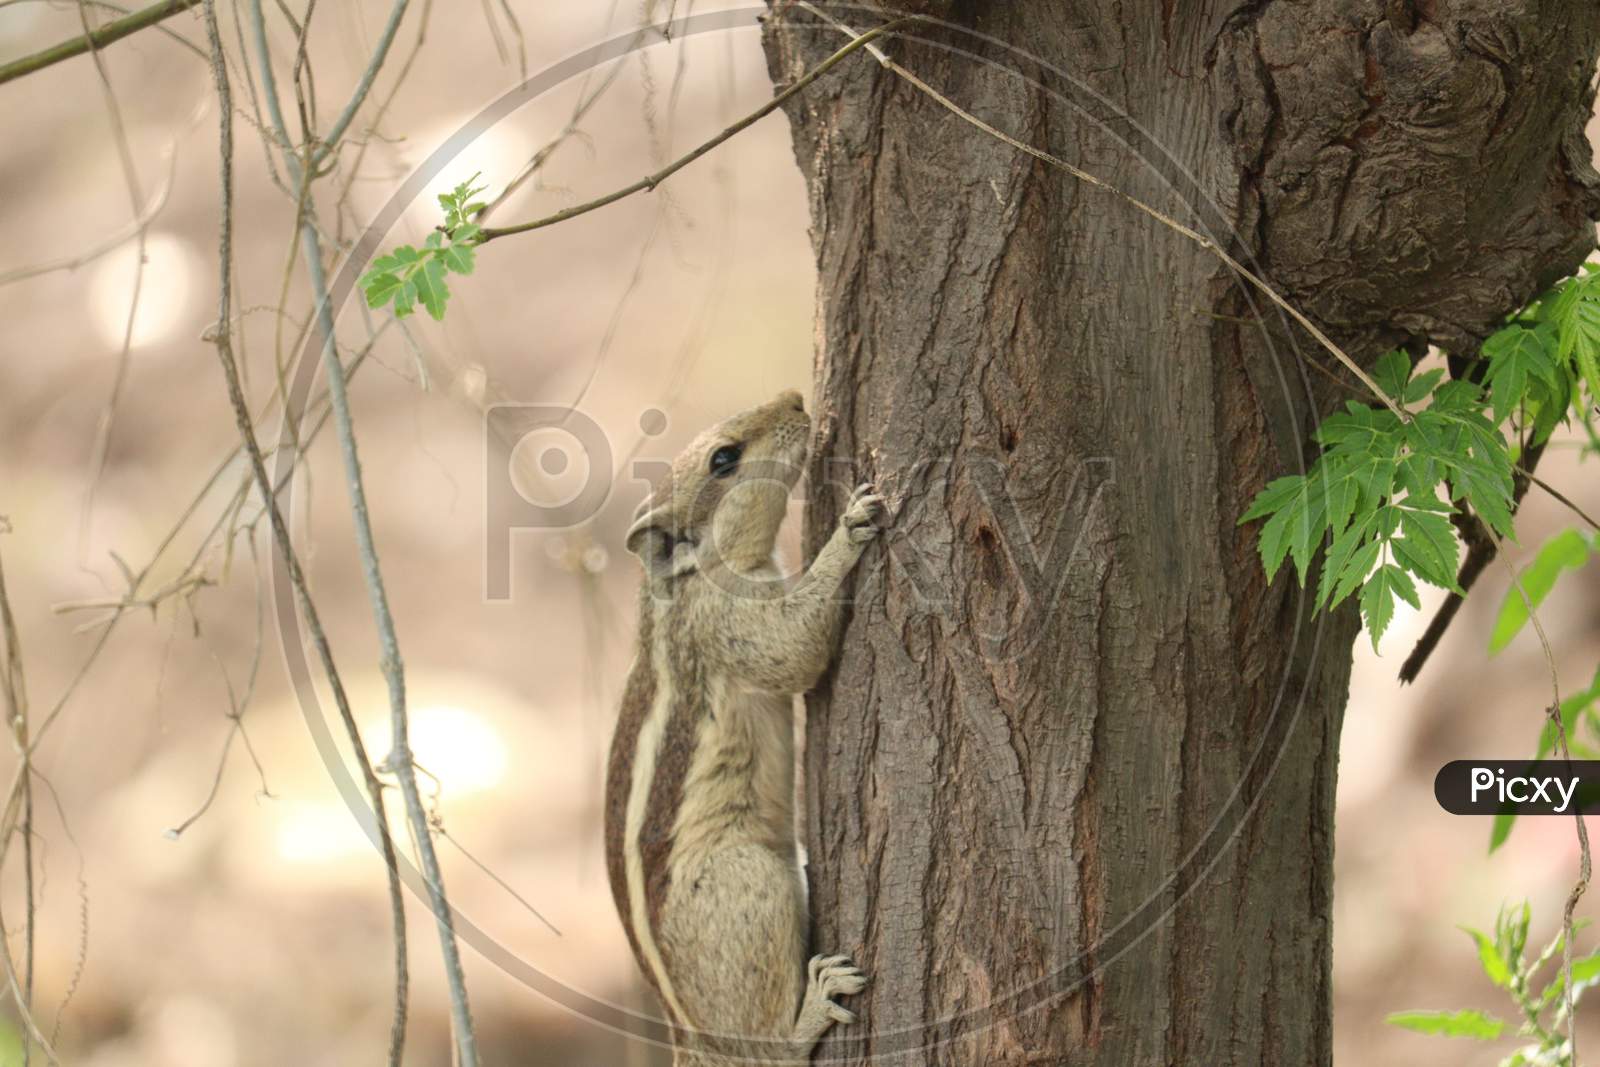 Squirrel climbing tree photo!